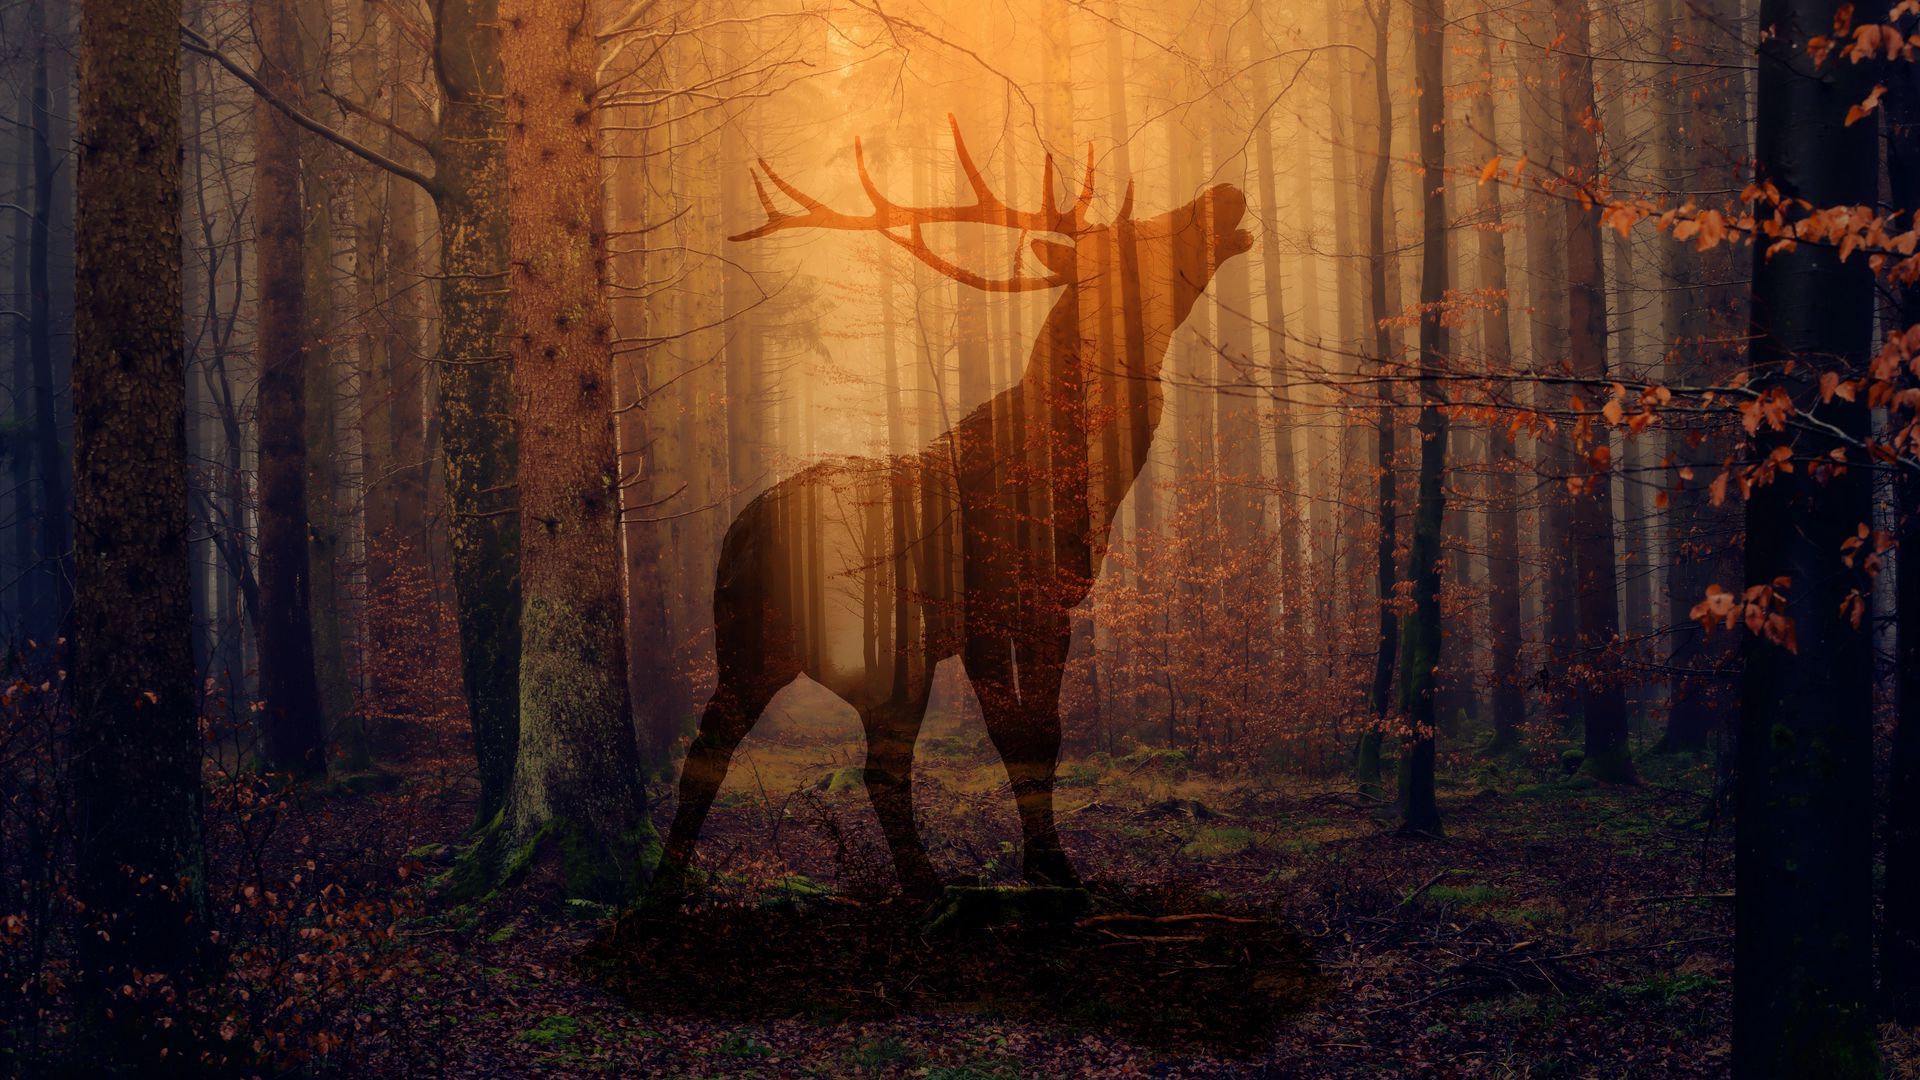 Download wallpaper 1920x1080 deer, forest, fog, silhouette, autumn full hd, hdtv, fhd, 1080p HD background